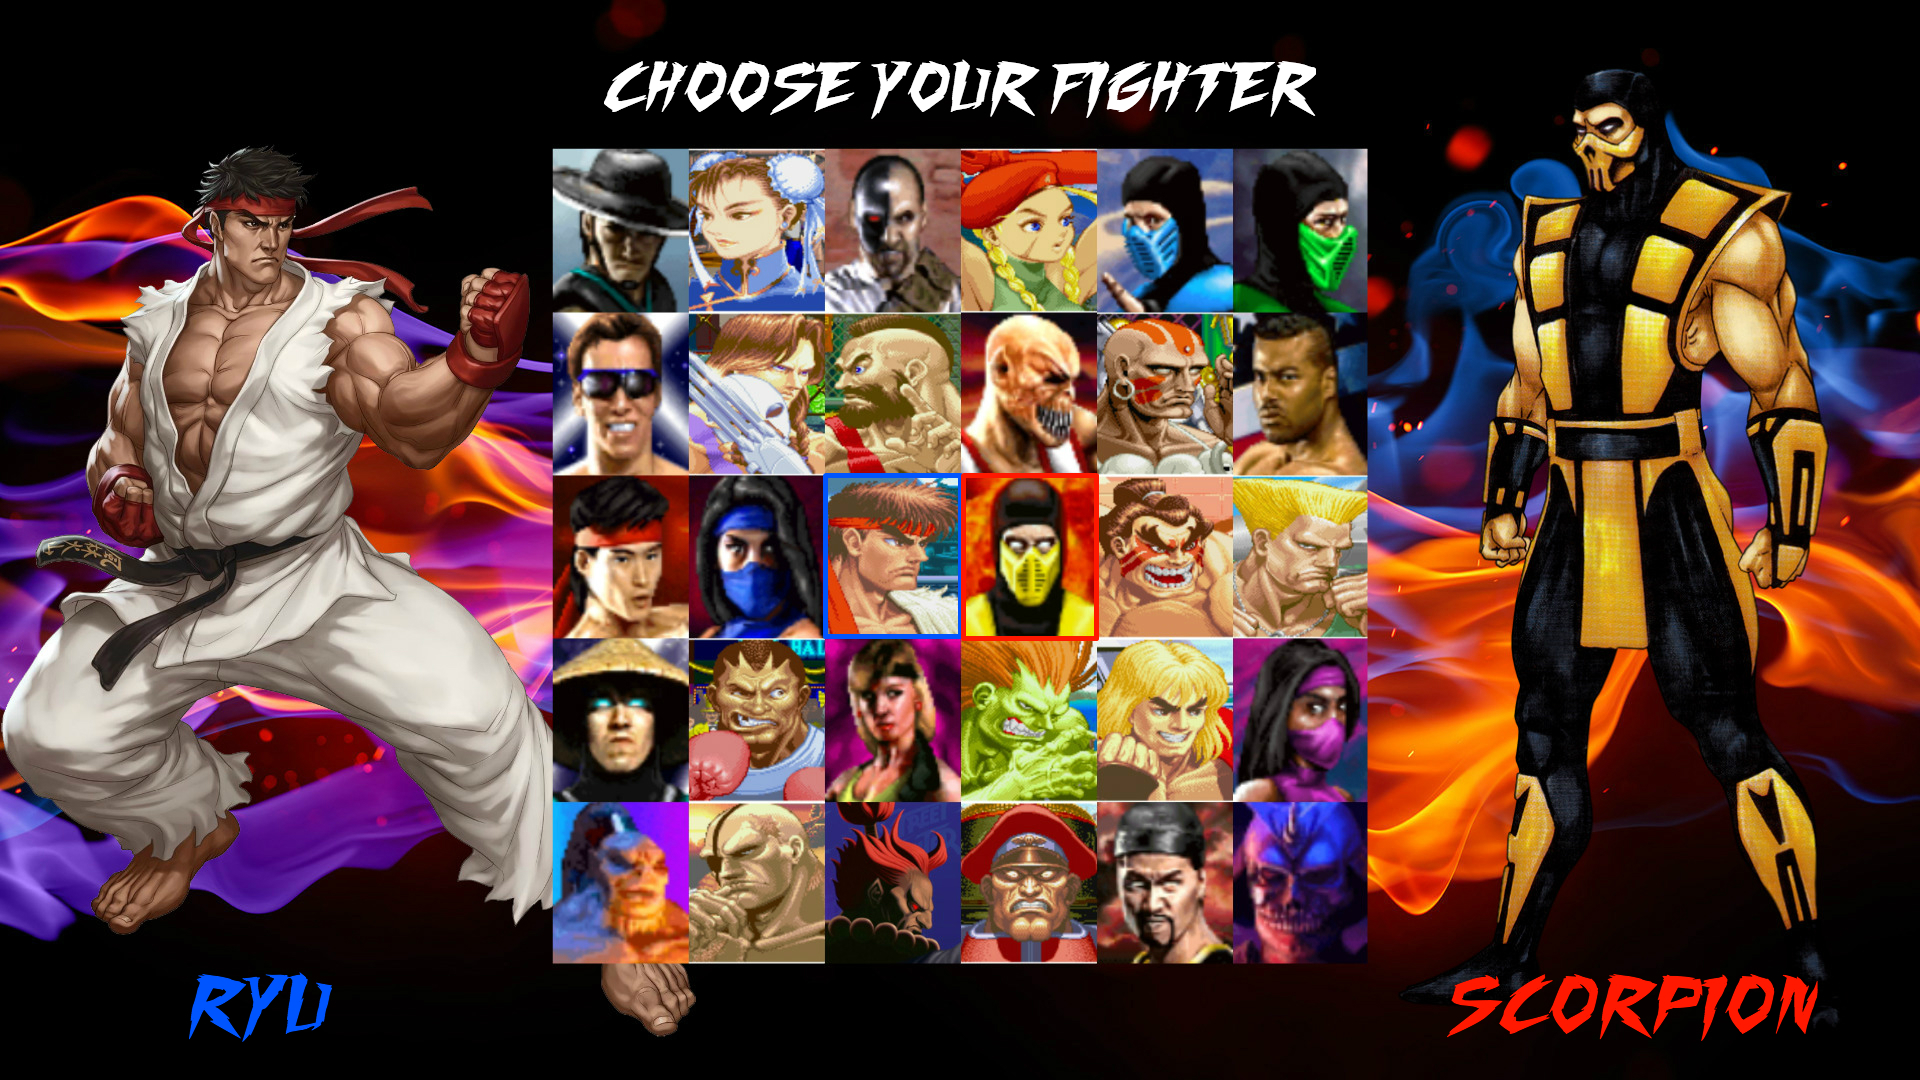 An honest question: Could a Mortal Kombat Vs. Street Fighter